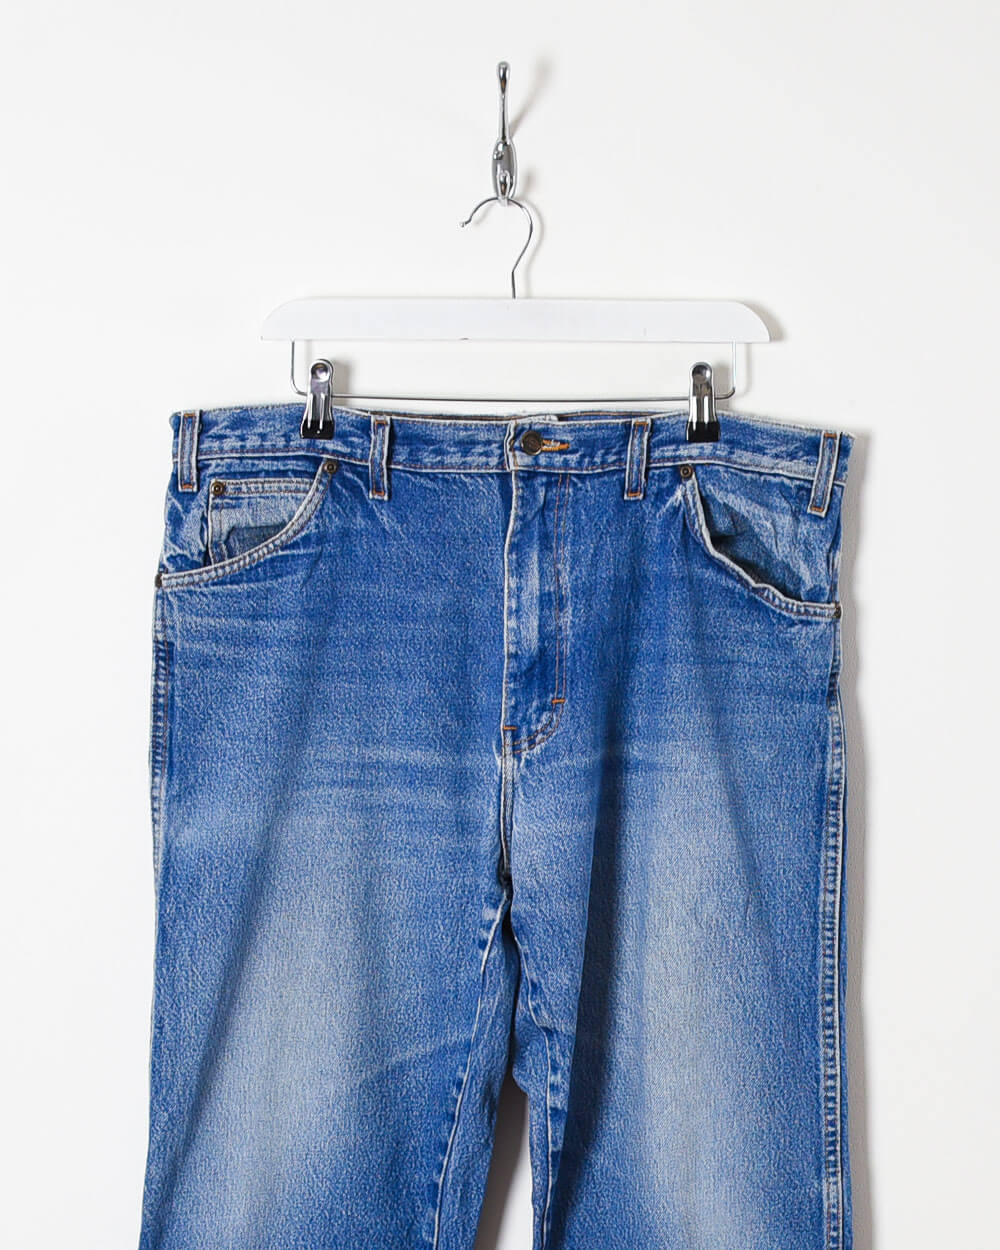 Vintage Jeans by Redwood Blue Denim Vintage Wide Leg Jeans W32 L30 